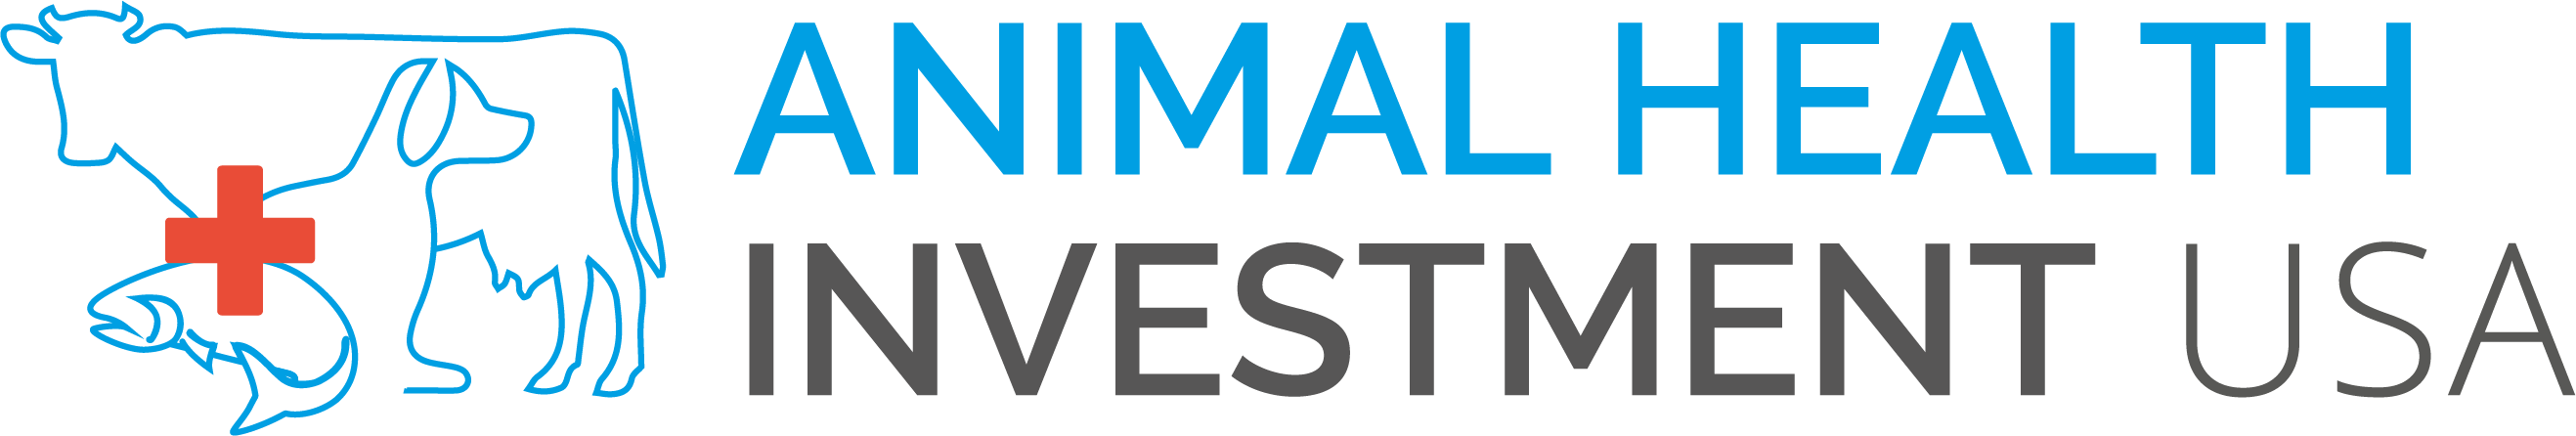 Animal Health Investment USA